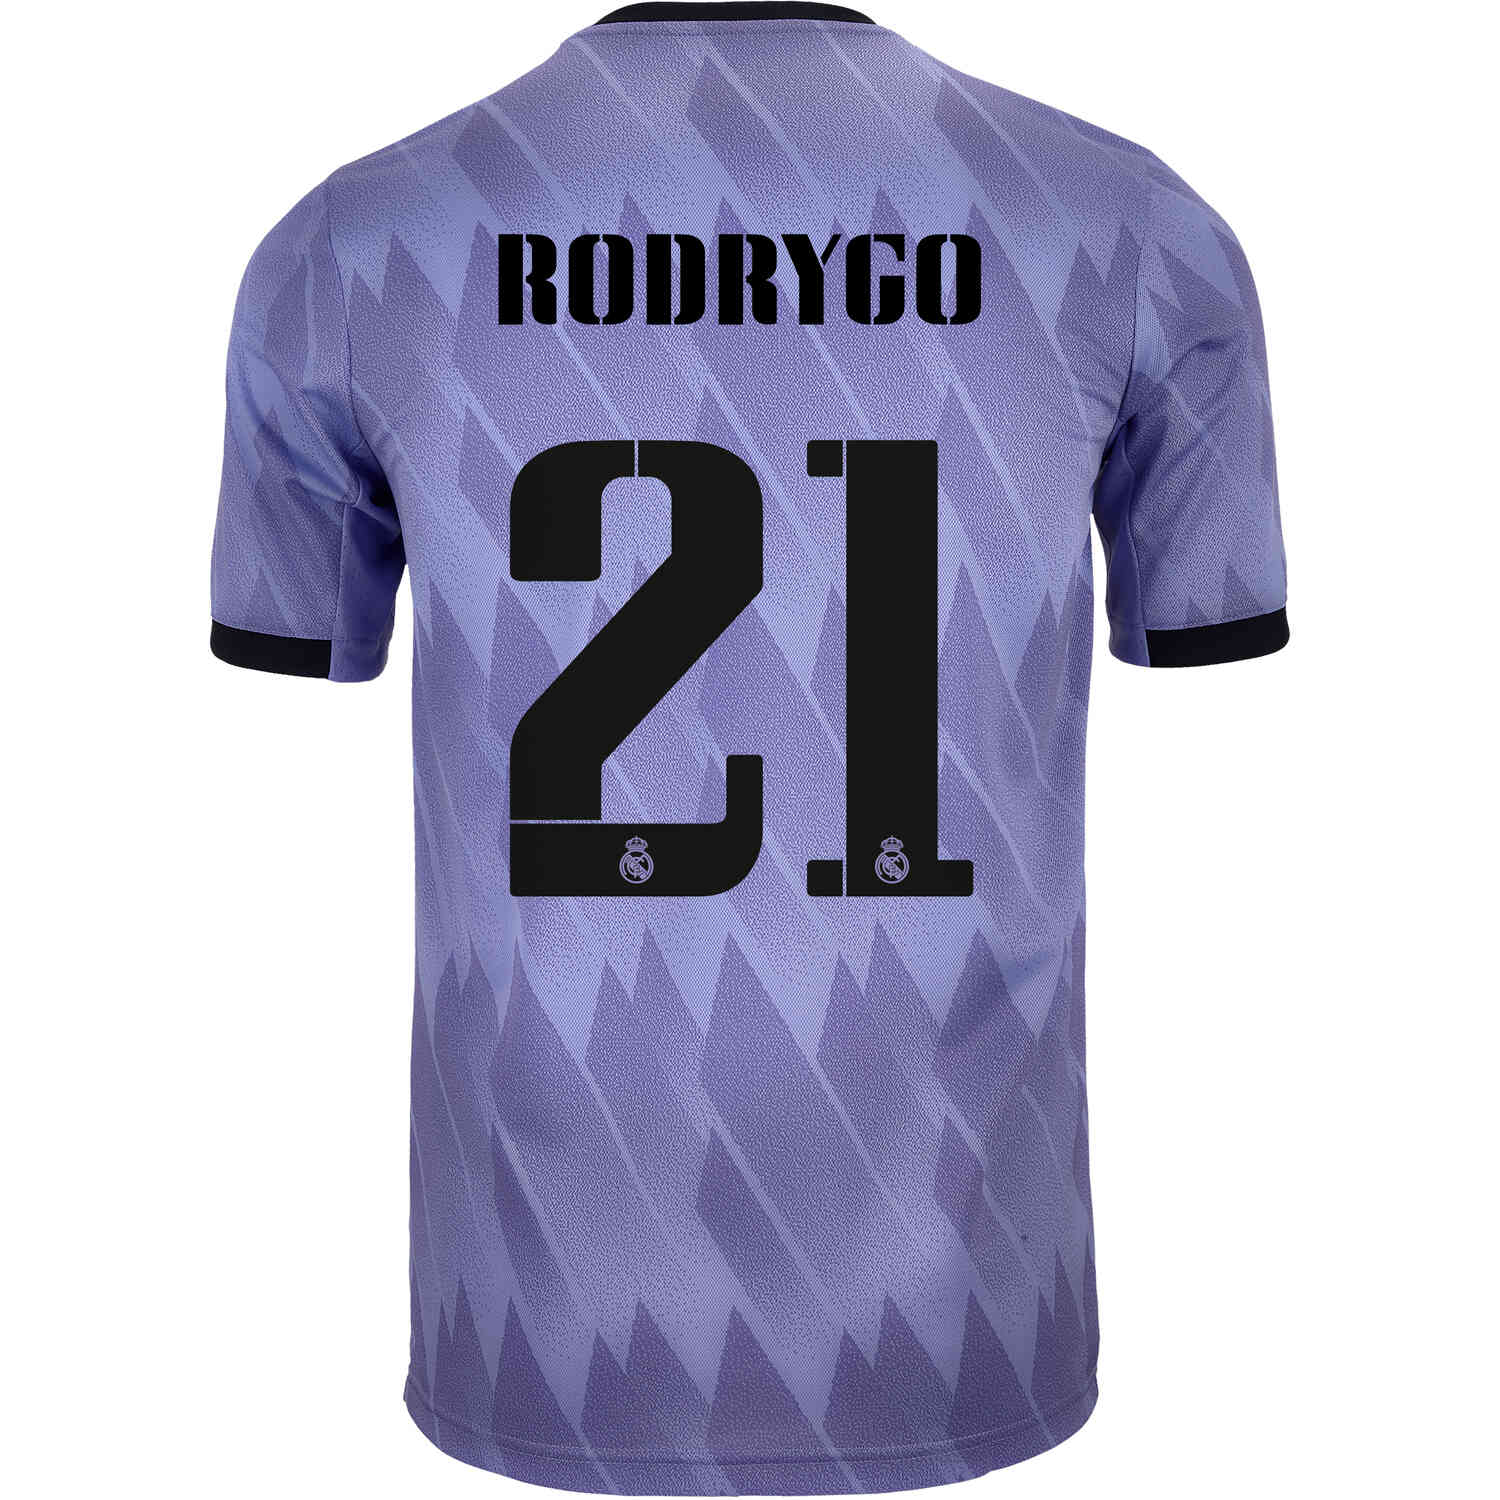 rodrygo real madrid jersey